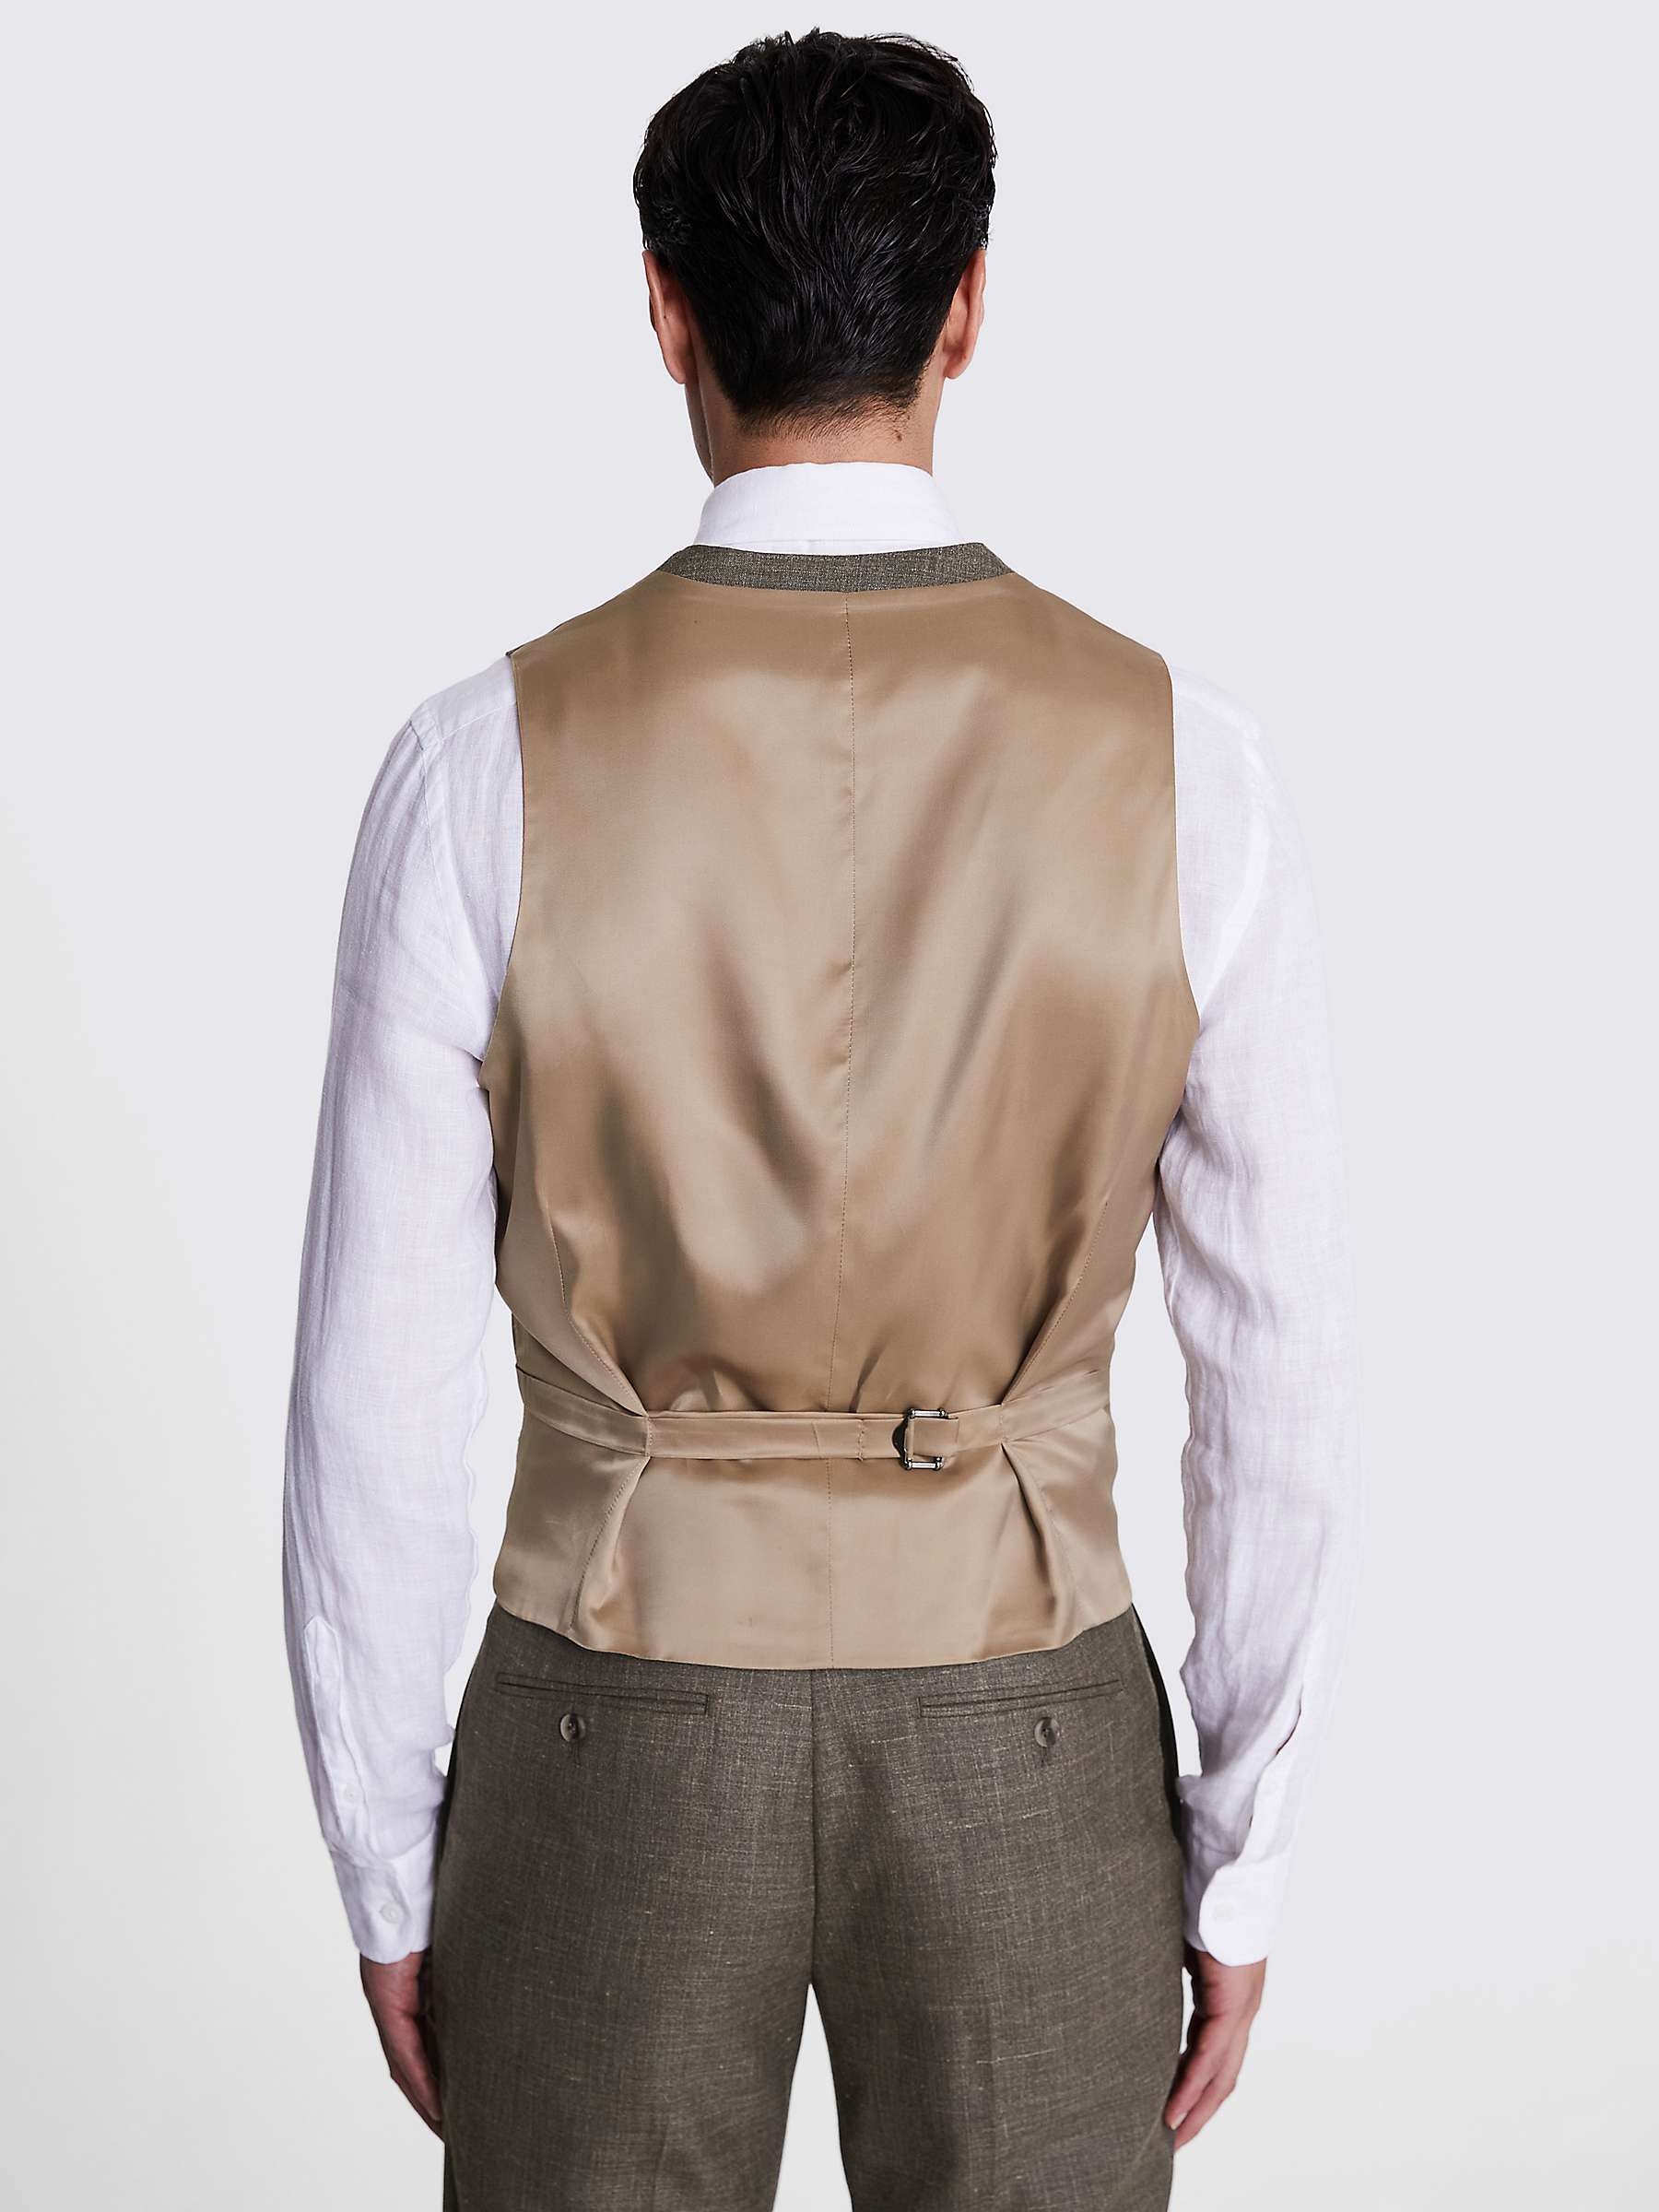 Buy Moss Italian Wool Blend Tailored Fit Waistcoat, Brown Online at johnlewis.com